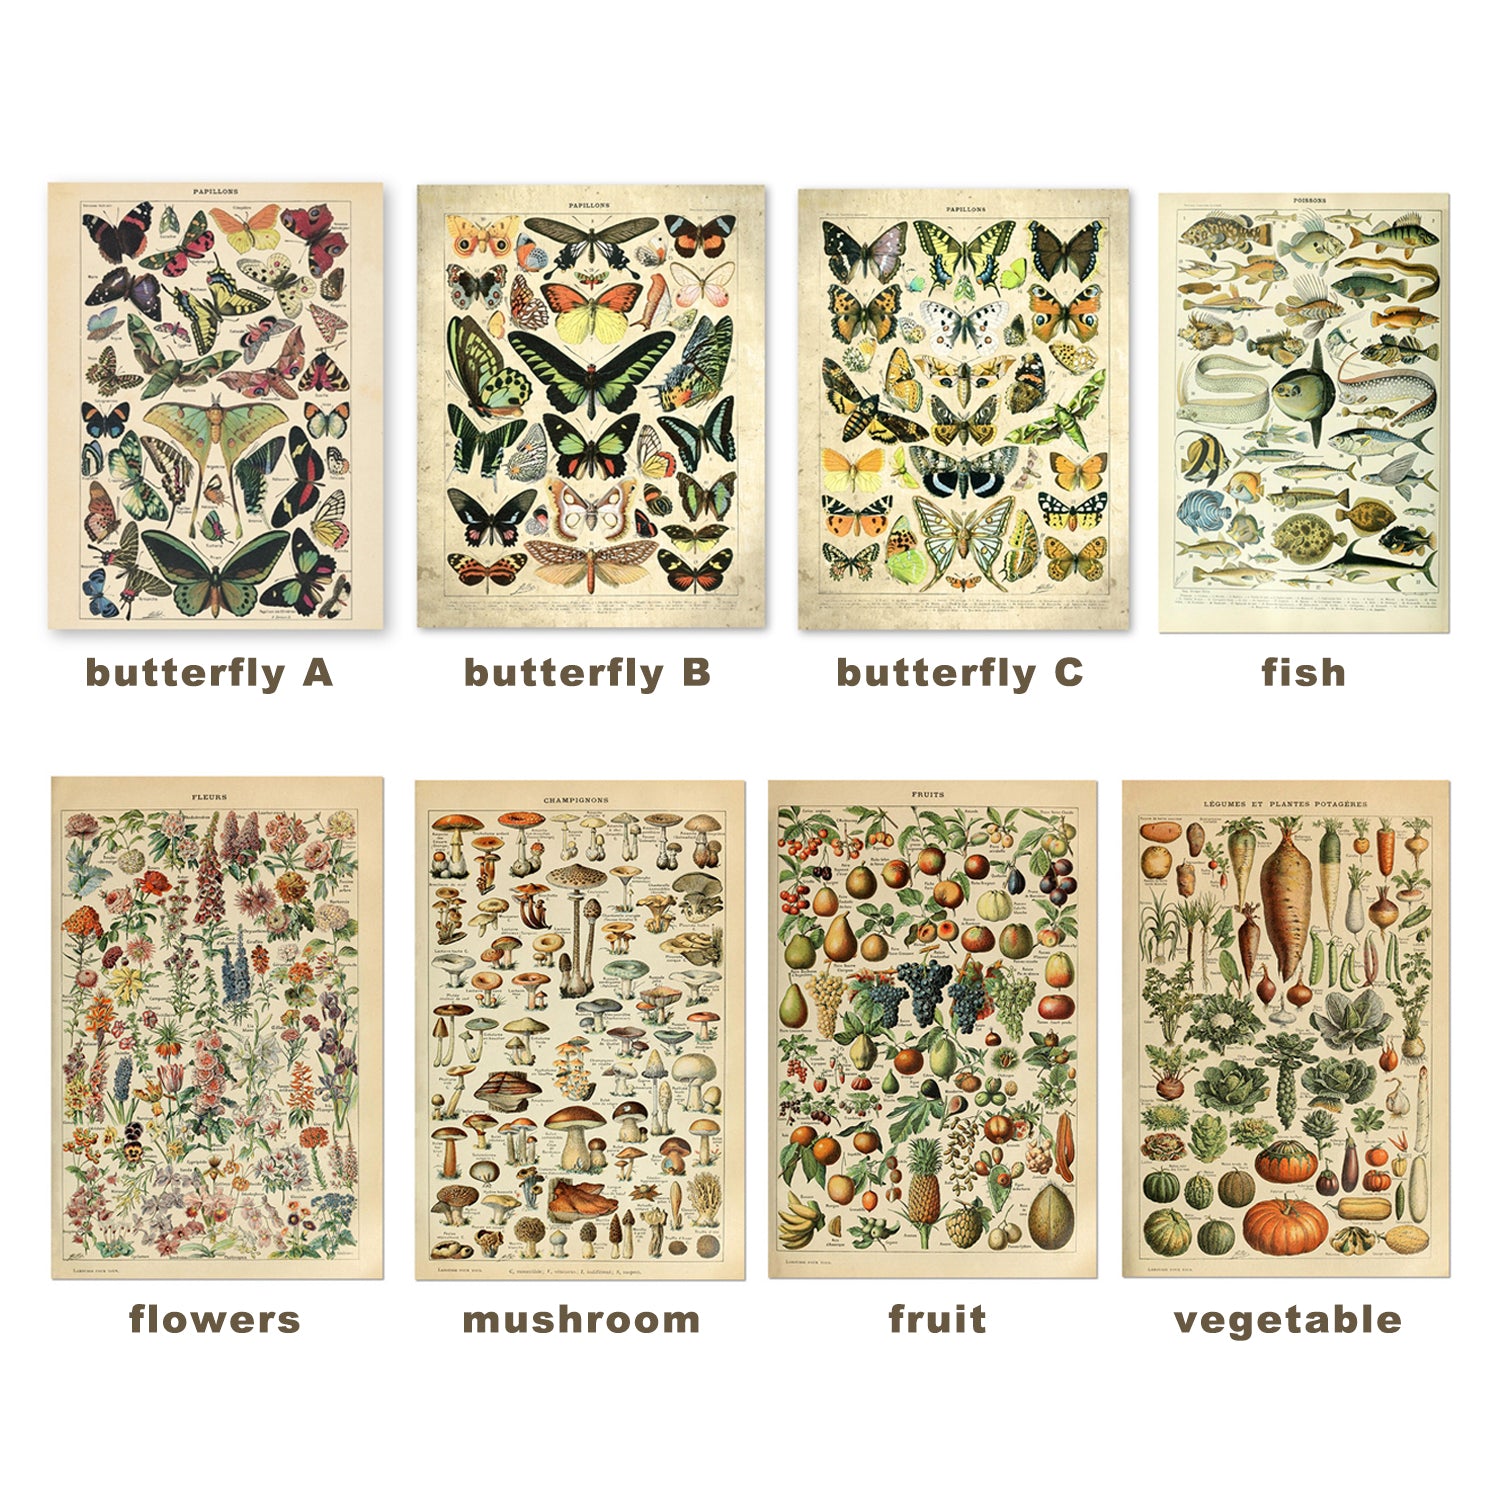 Cavallini Decorative Paper Papillons butterfly Vintage wall art nostalgic poster animal flowers vegetable botanical specimen